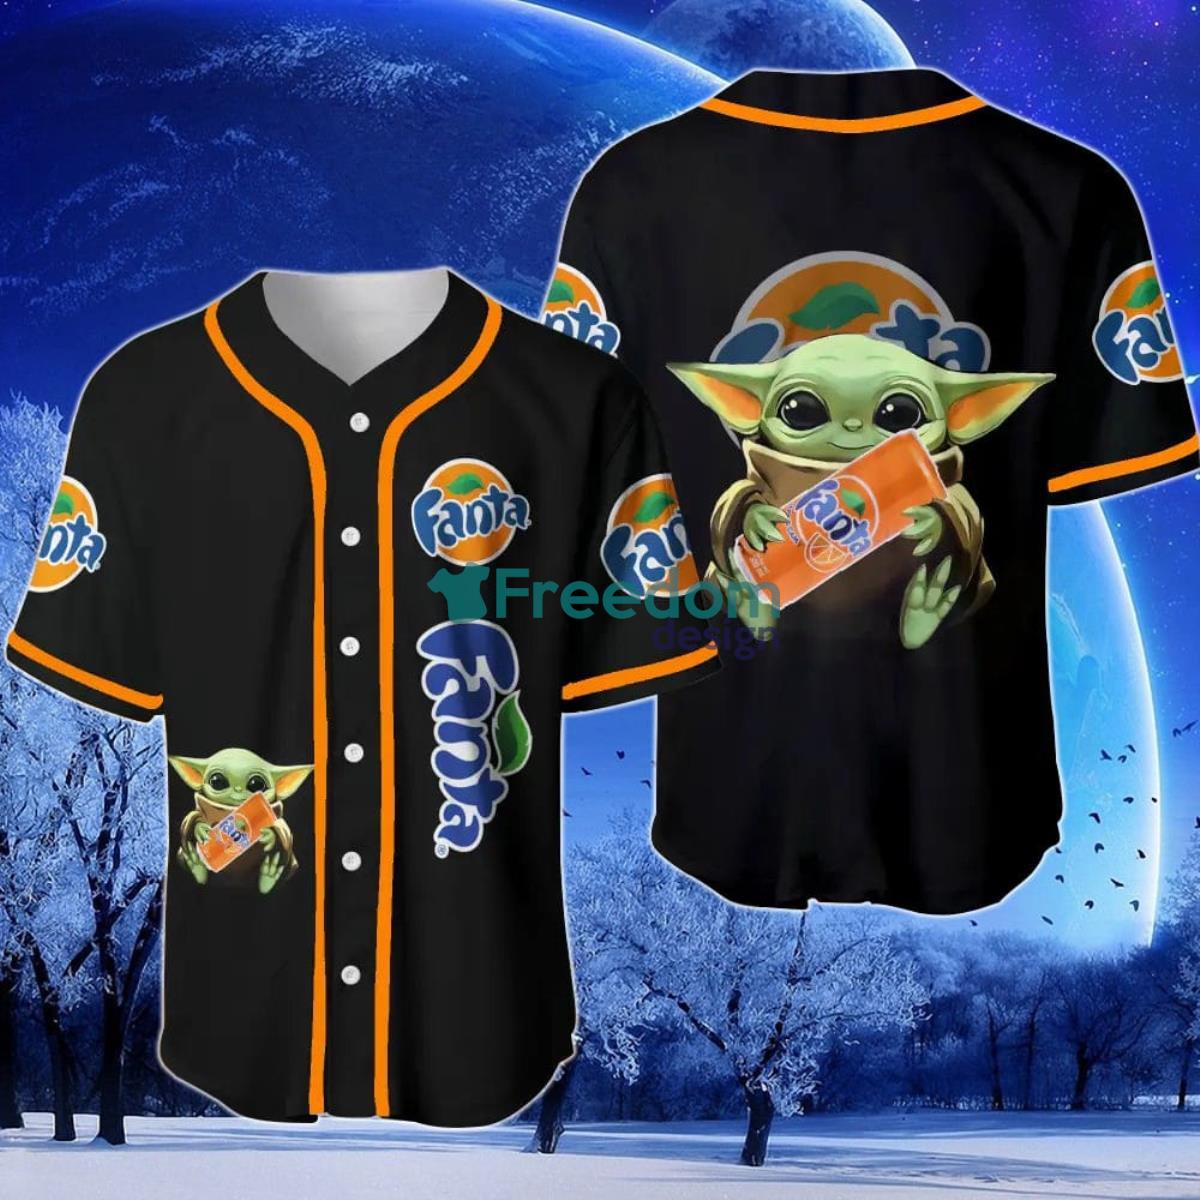 MLB Baseball Chicago Cubs Star Wars Baby Yoda Shirt T Shirt - Freedomdesign